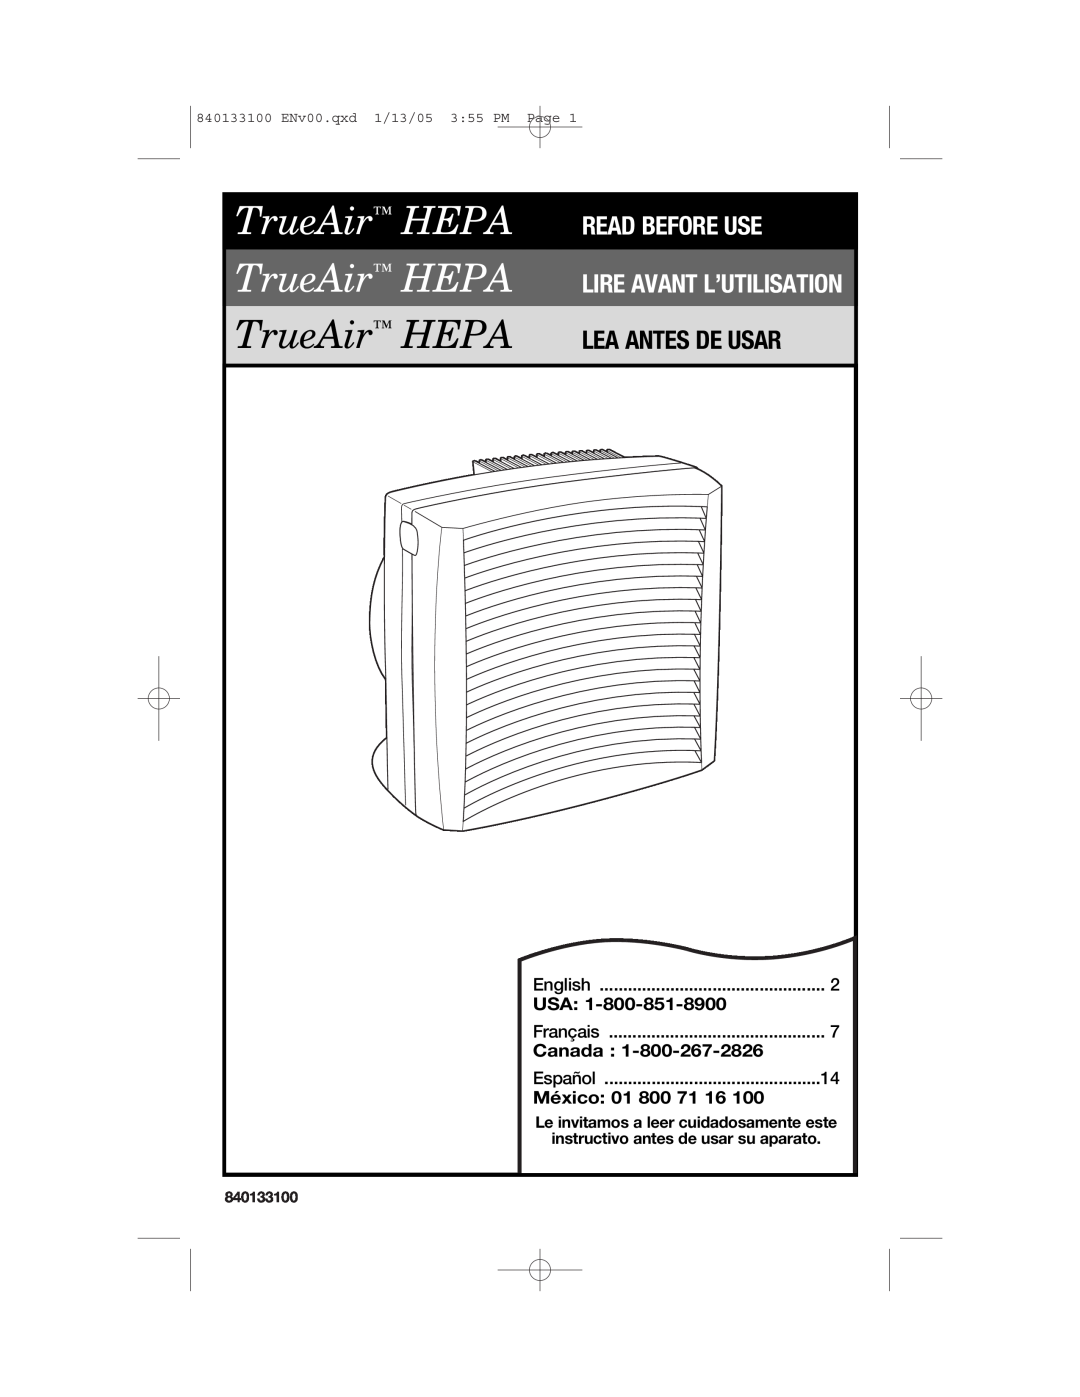 Hamilton Beach manual Canada, México 01, TrueAir HEPA, Read Before Use, Lea Antes De Usar, Lire Avant L’Utilisation 